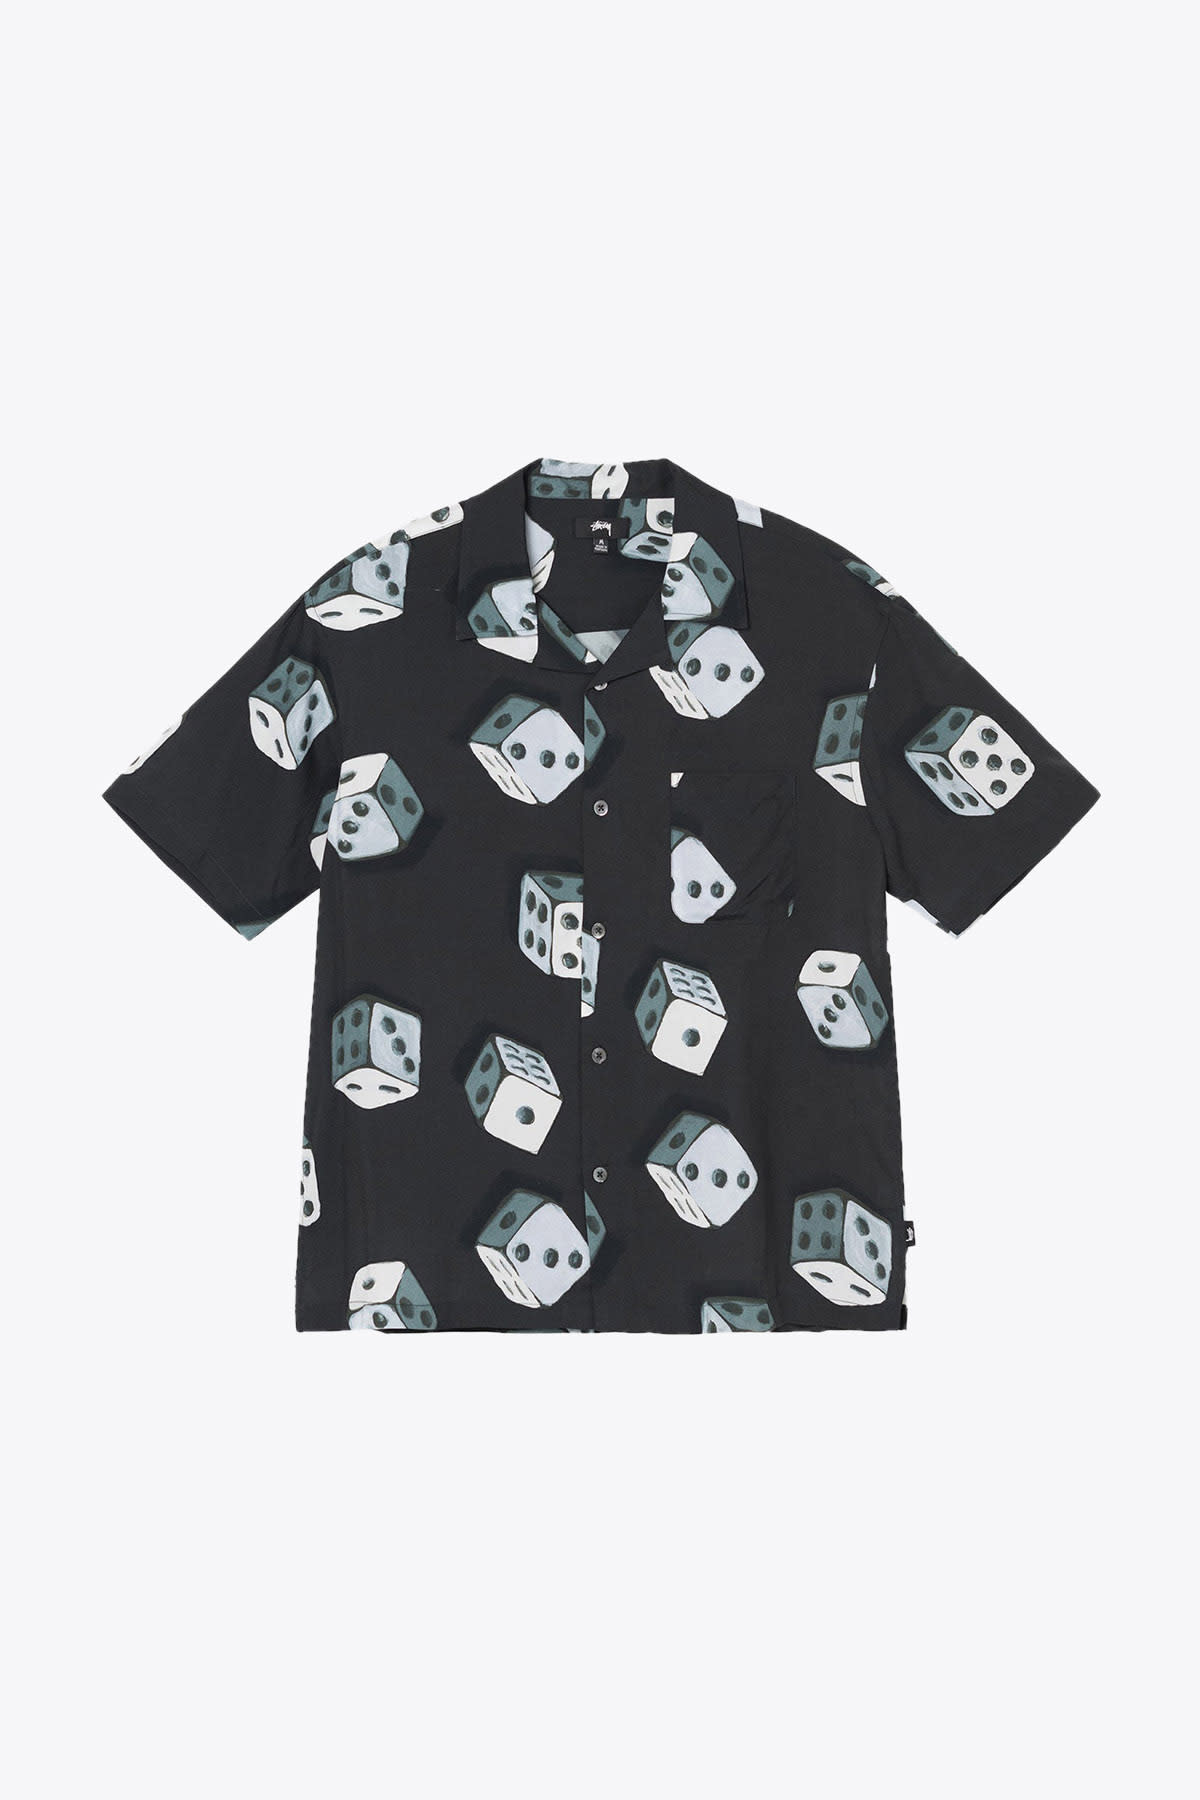 Stussy Dice Pattern Shirt Black viscose shirt with dice pattern print - Dice pattern shirt